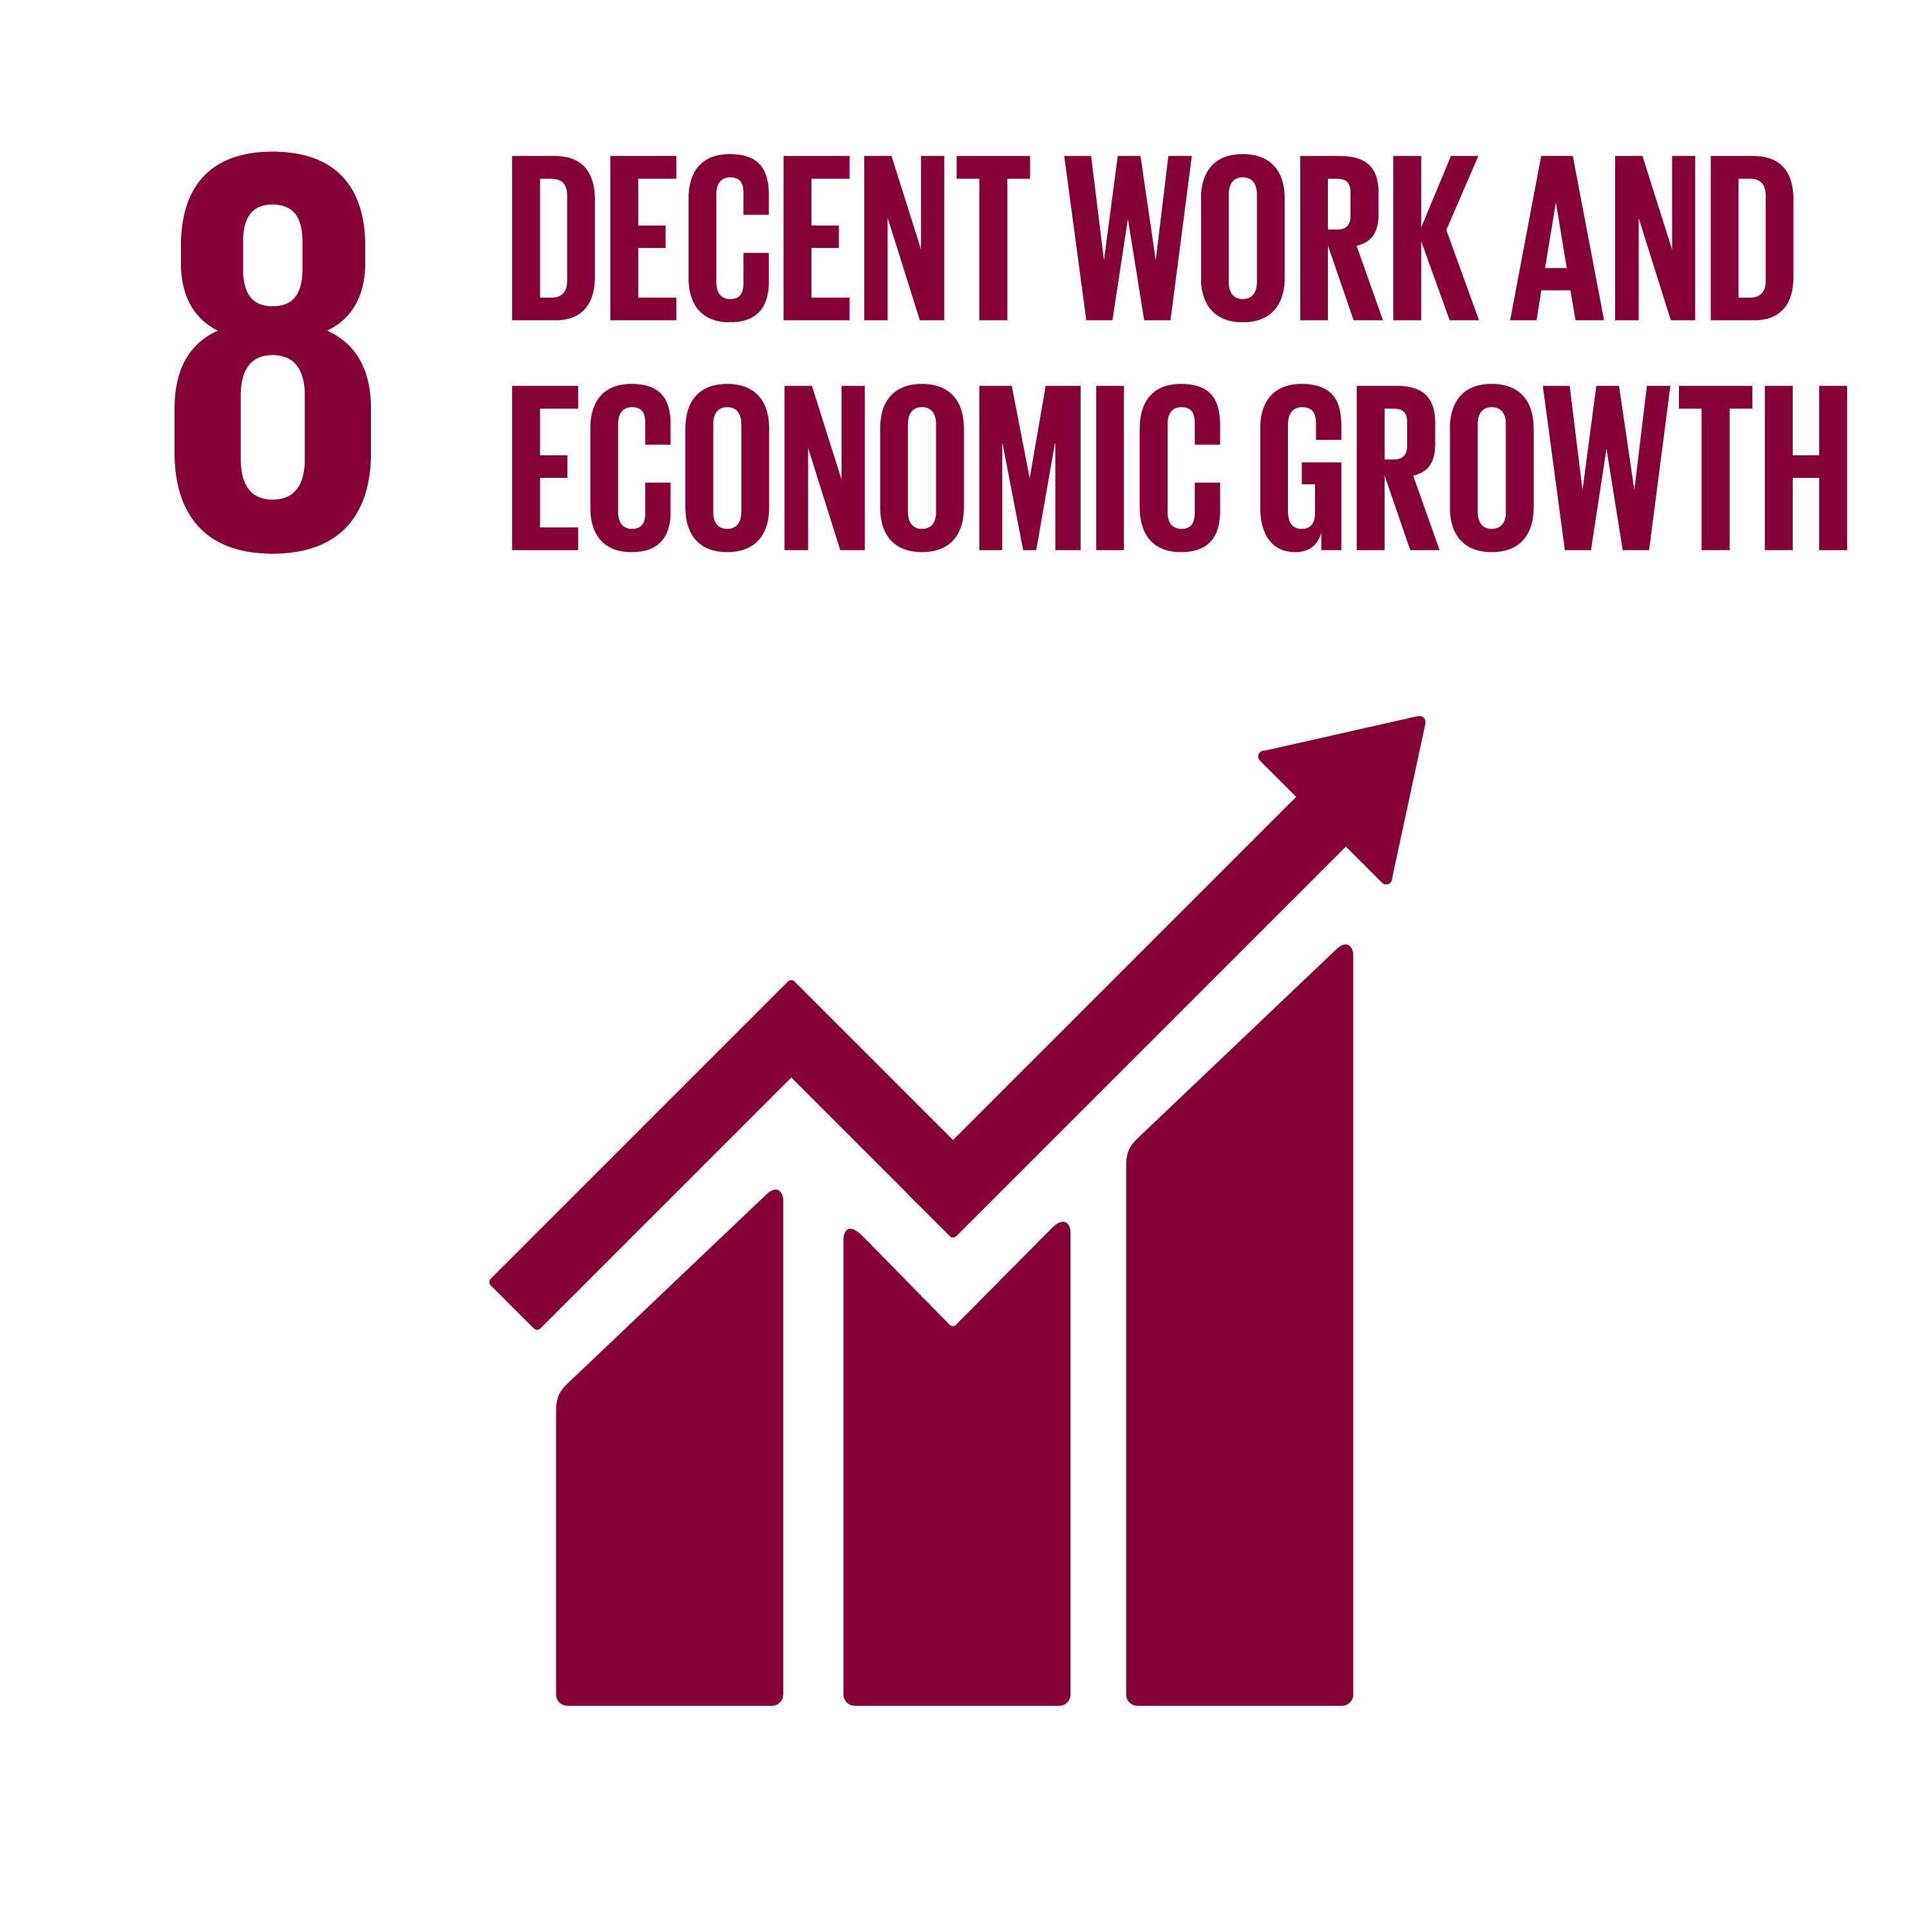 Sustainable development goals: Decent work and economic growth